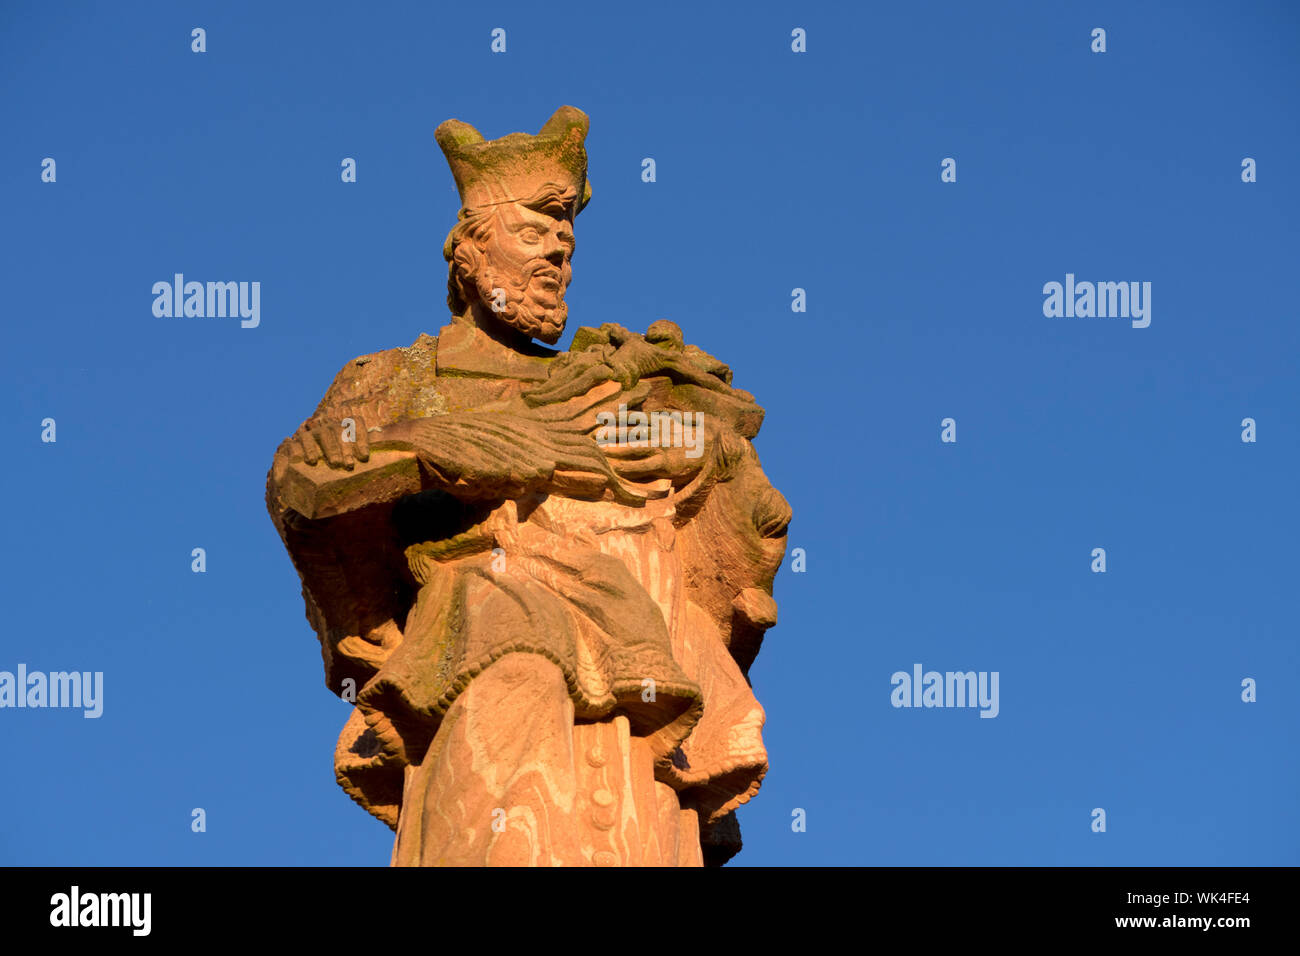 Johannes Nepomuk, statua, Heiliger, Standbild, JohannesvonNepomuk, Joannes de Pomuk, Märtirer, ertränkt Foto Stock